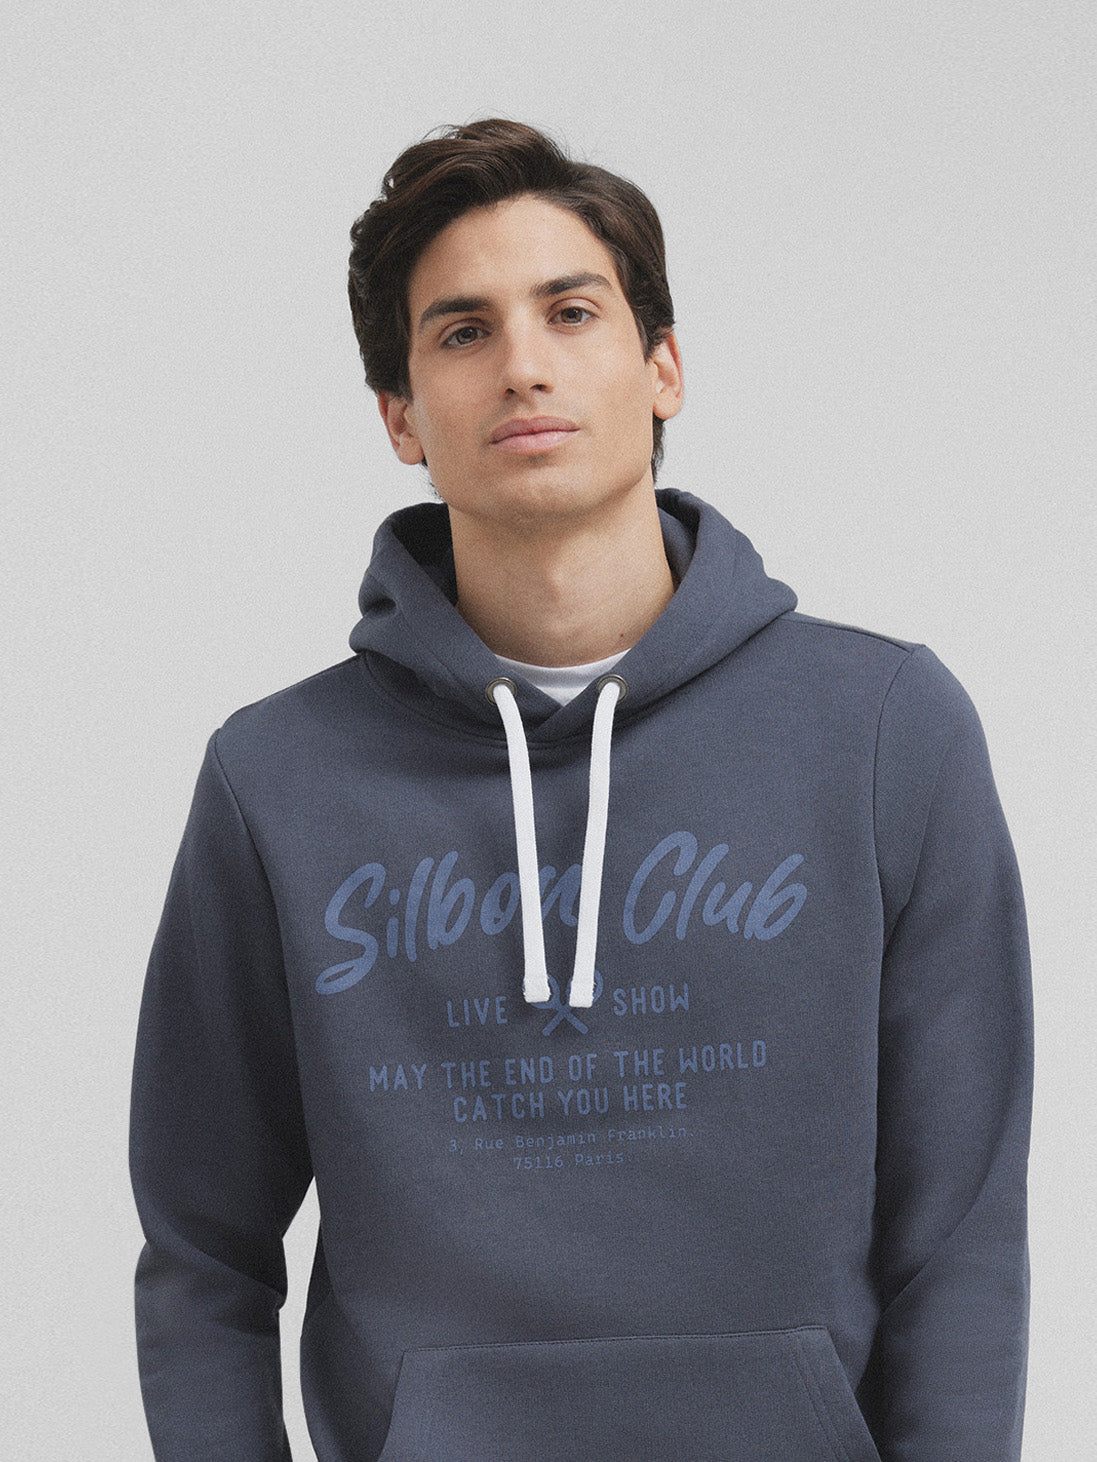 Silbon club navy blue hoodie